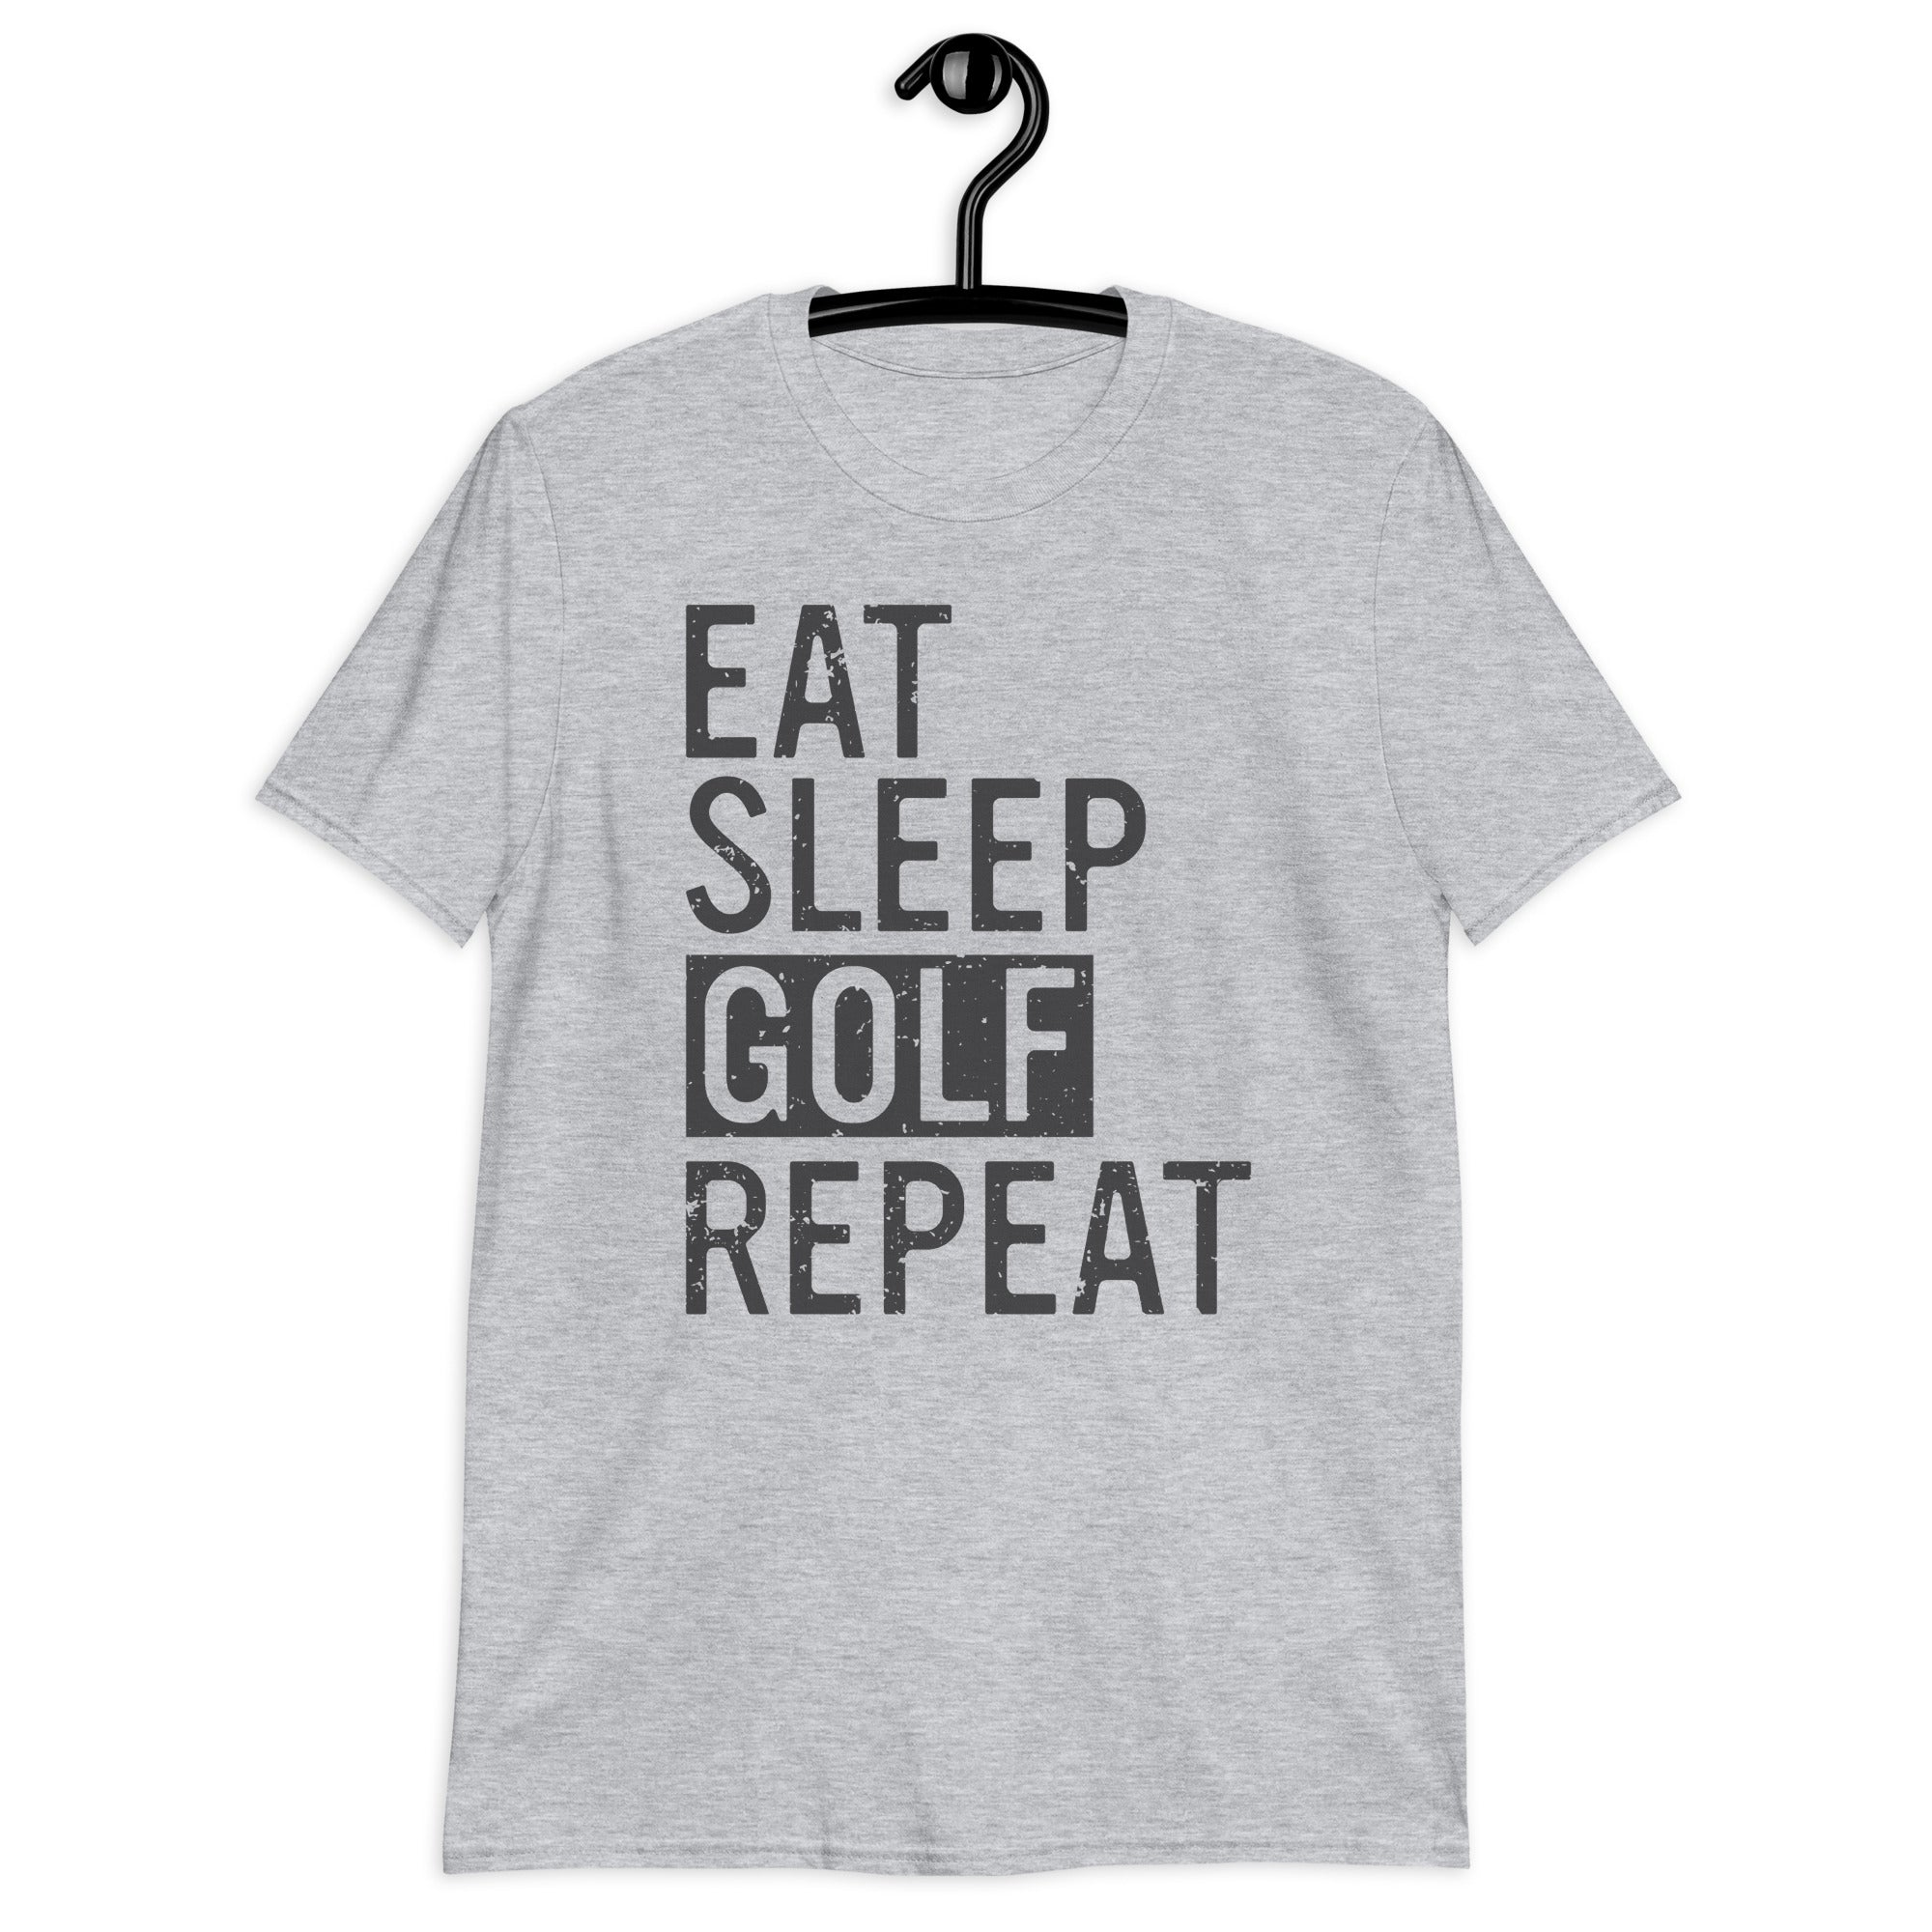 Eat. Sleep. Golf. Repeat.